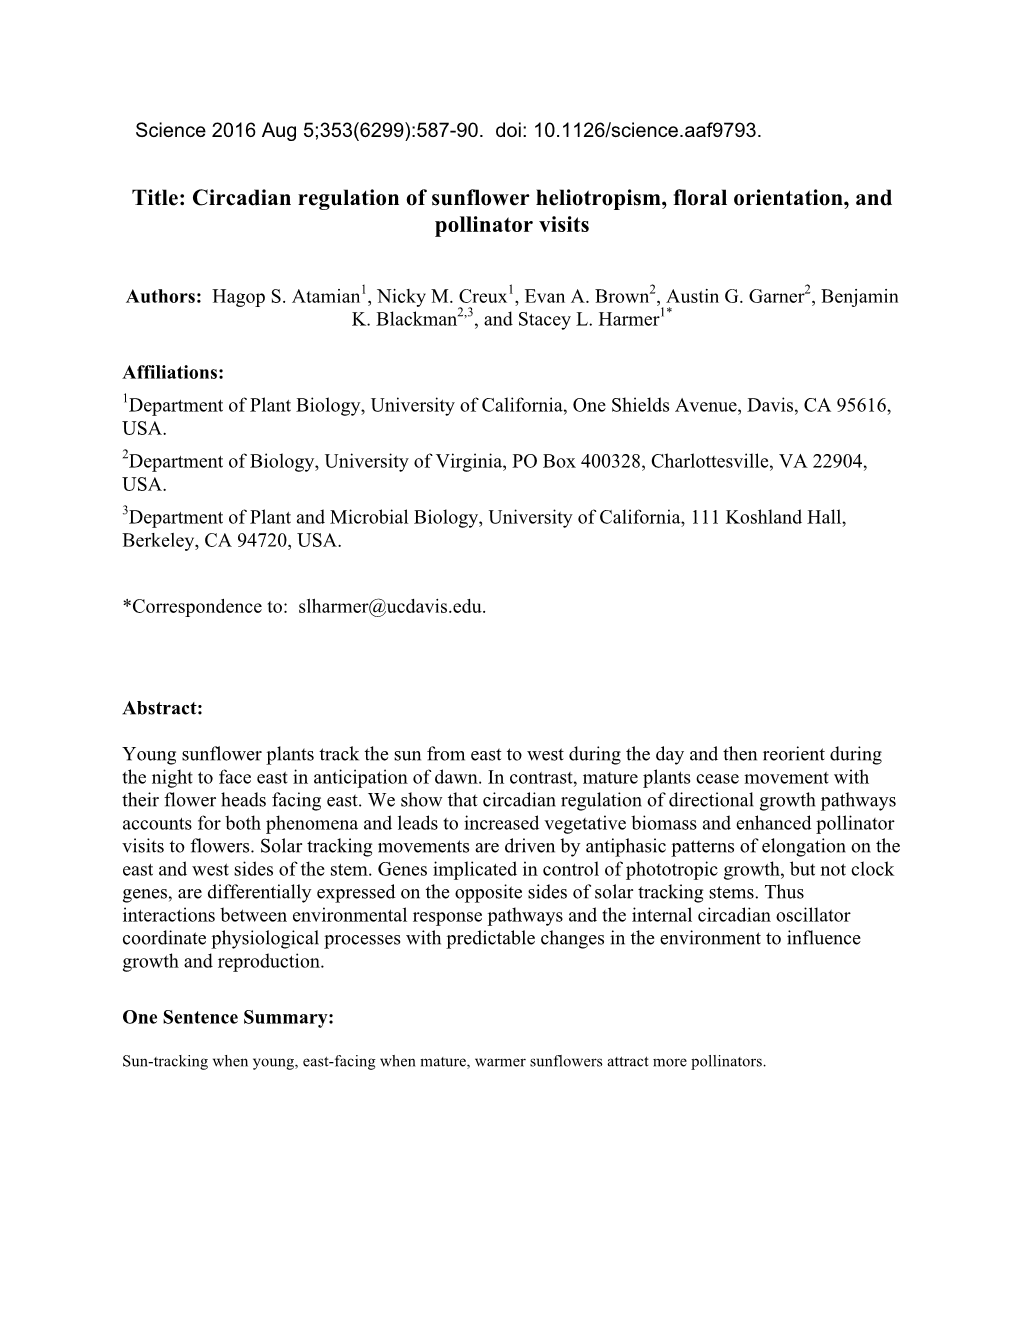 Circadian Regulation of Sunflower Heliotropism, Floral Orientation, and Pollinator Visits